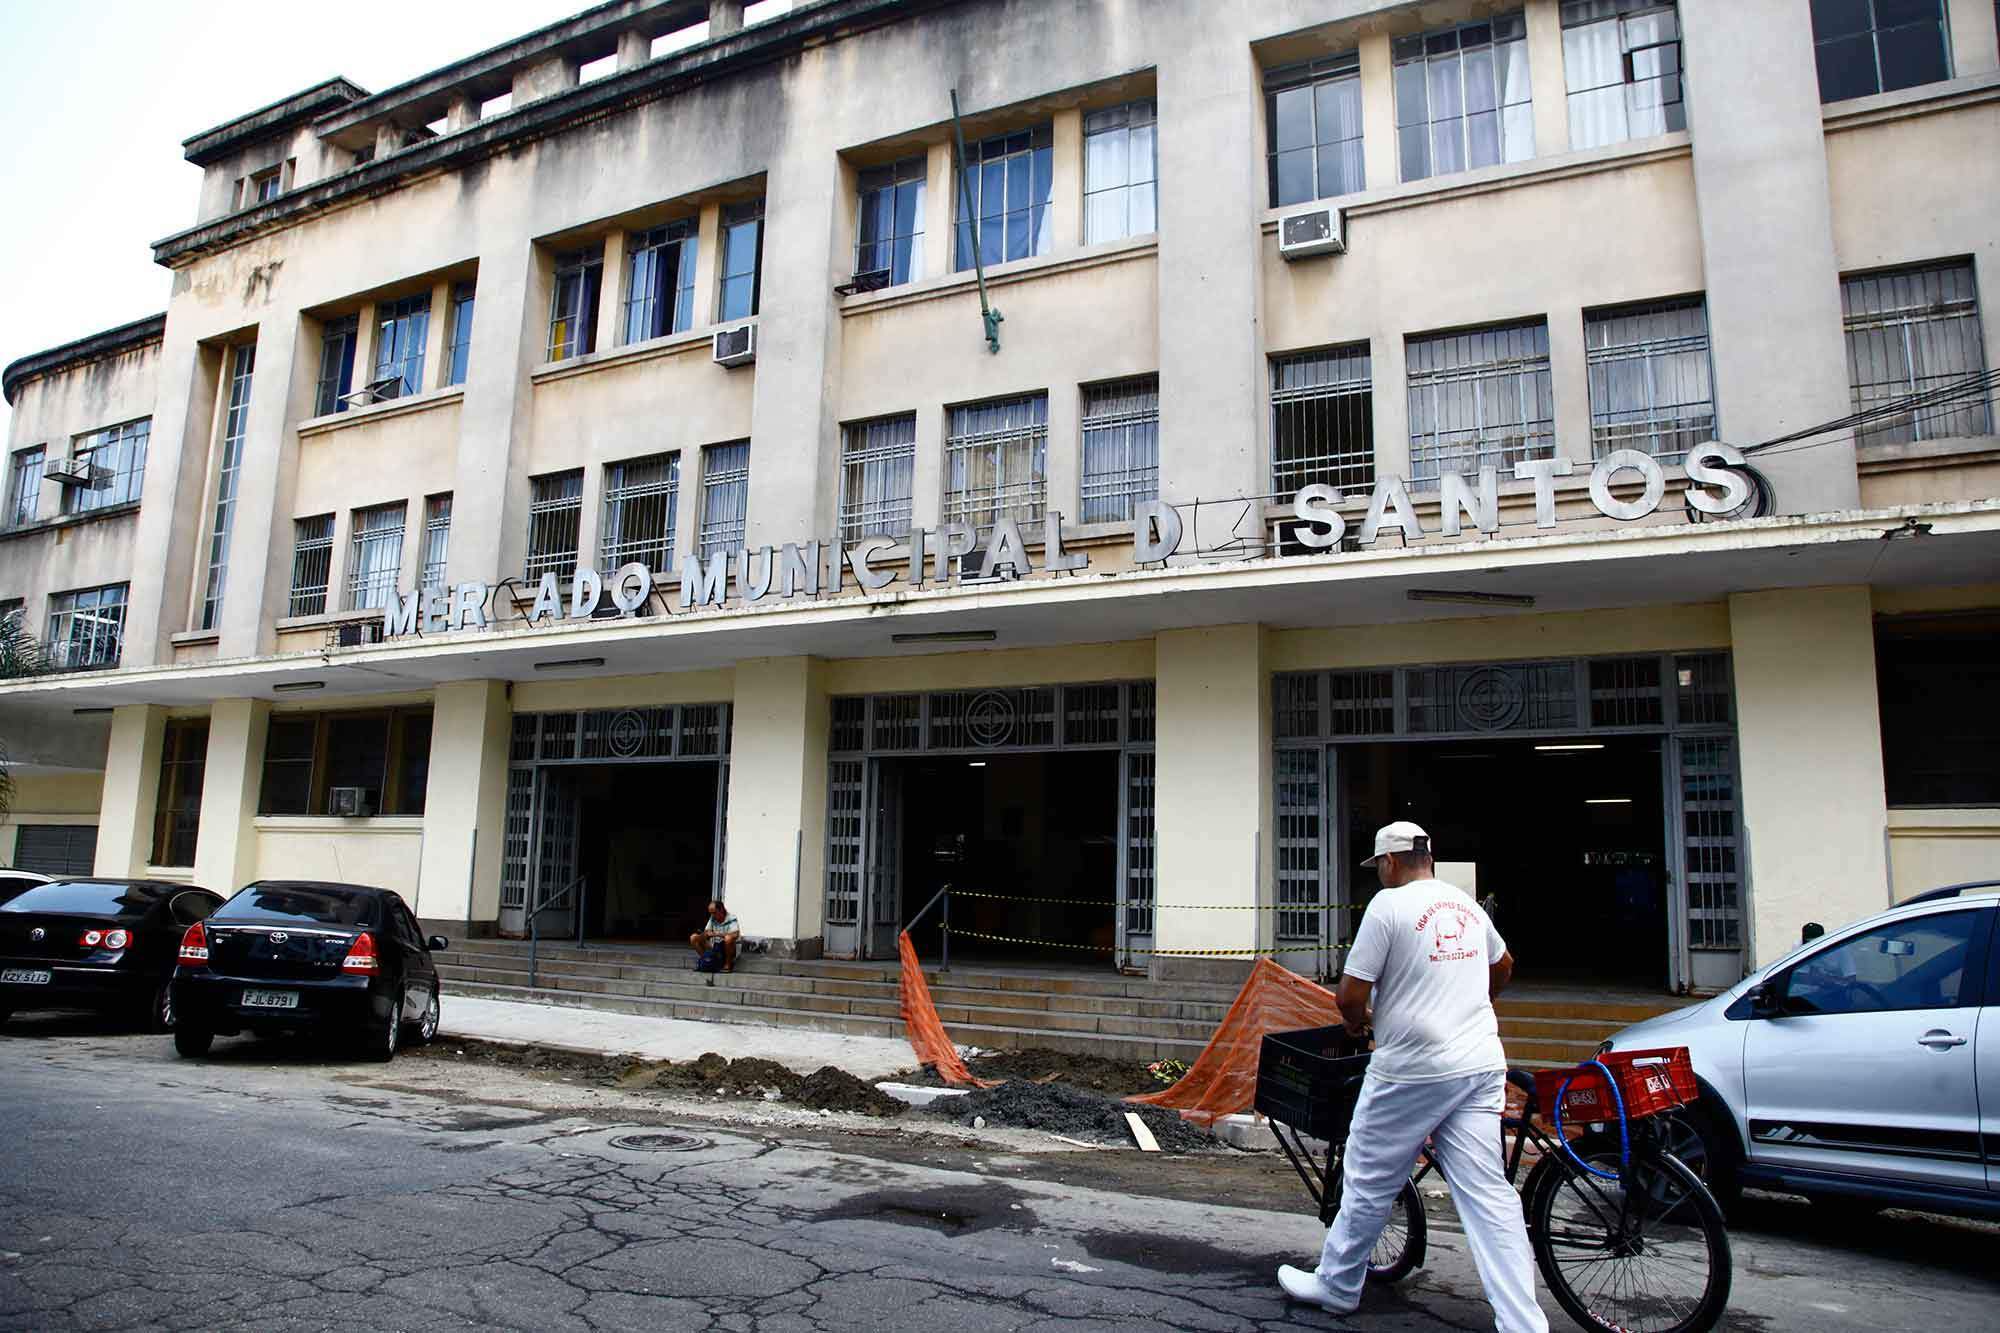 Mercado Municipal de Santos coleciona problemas